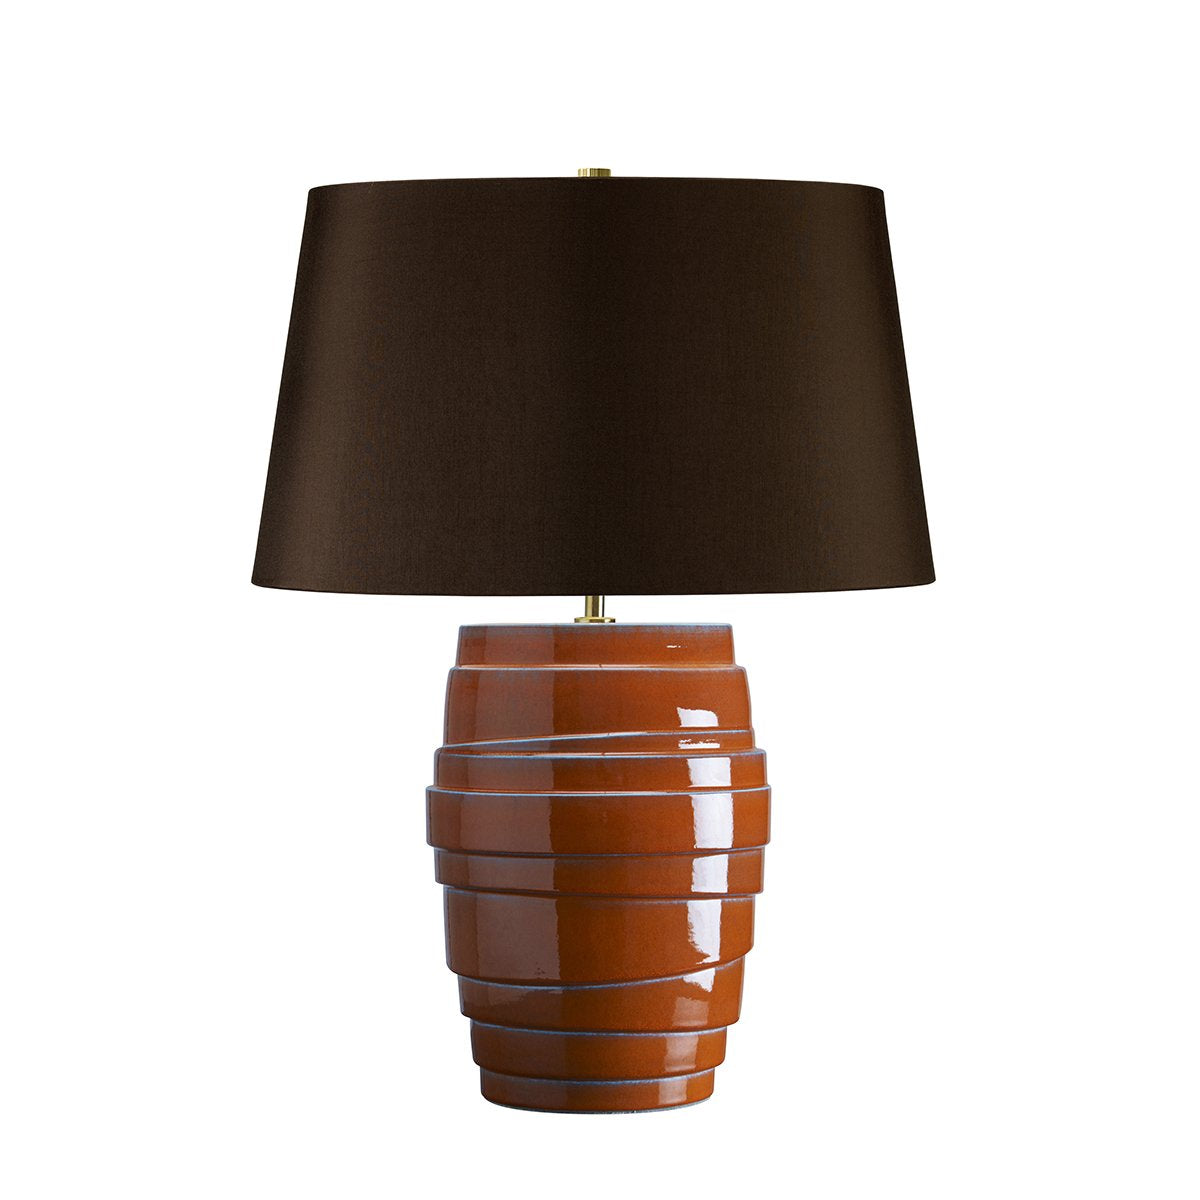 Motspur Orange Table Lamp c/w Shade - ID 8379